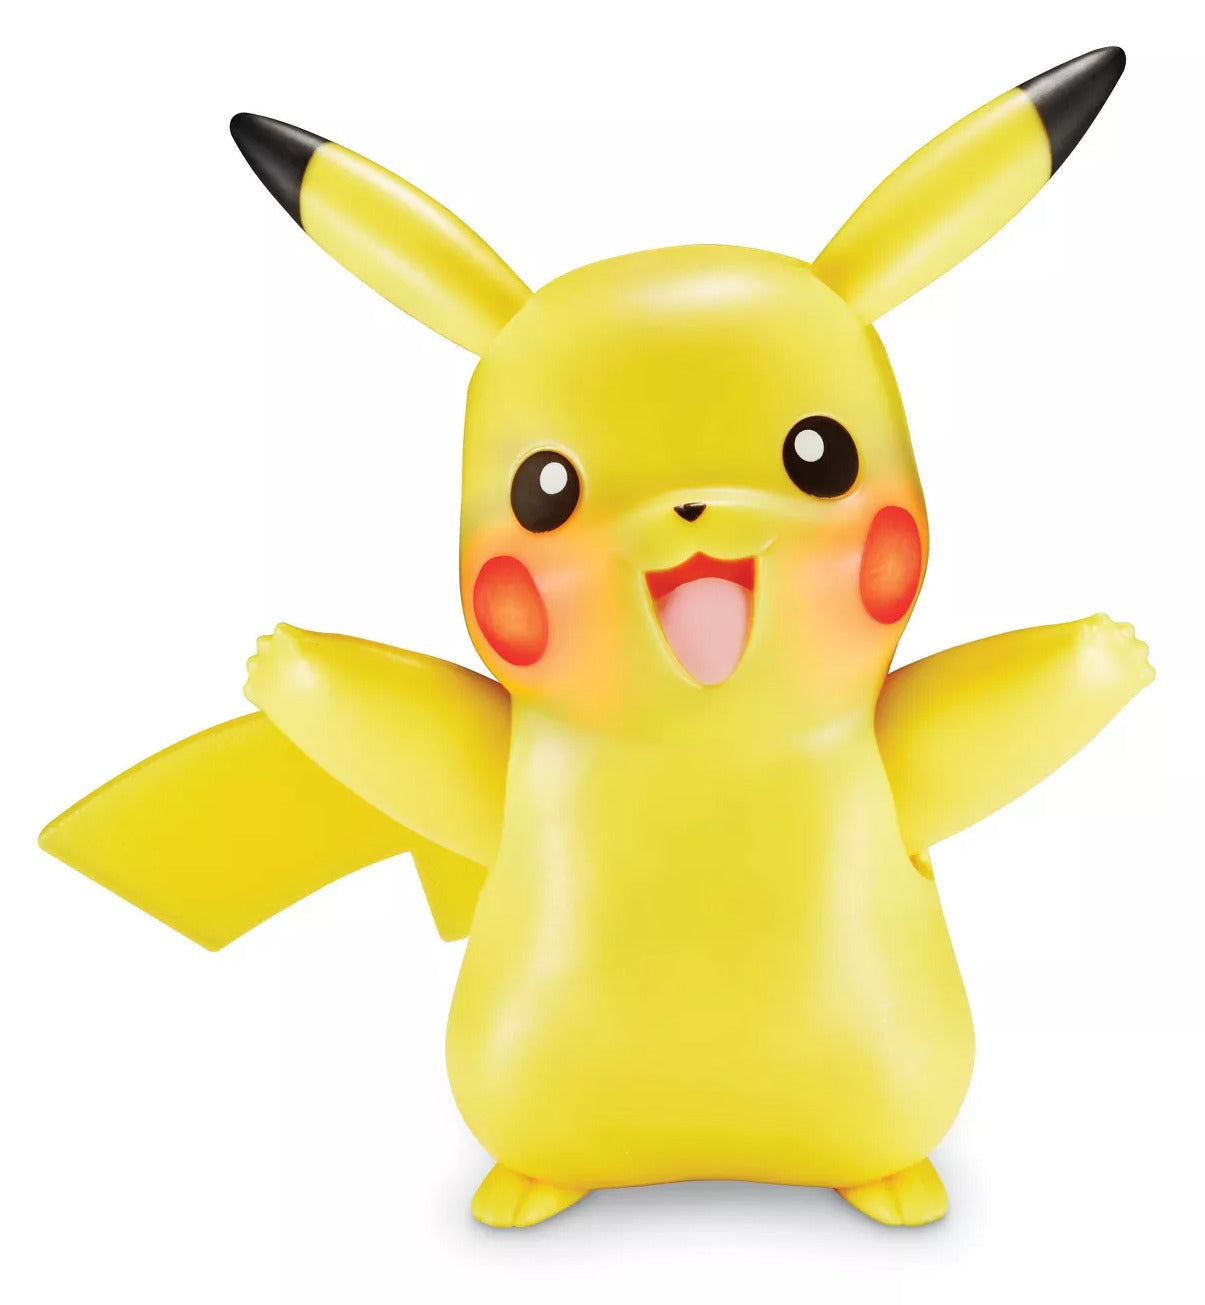 Pokémon My Partner Pikachu Electronic Interactive Toy Figure New  889933977593